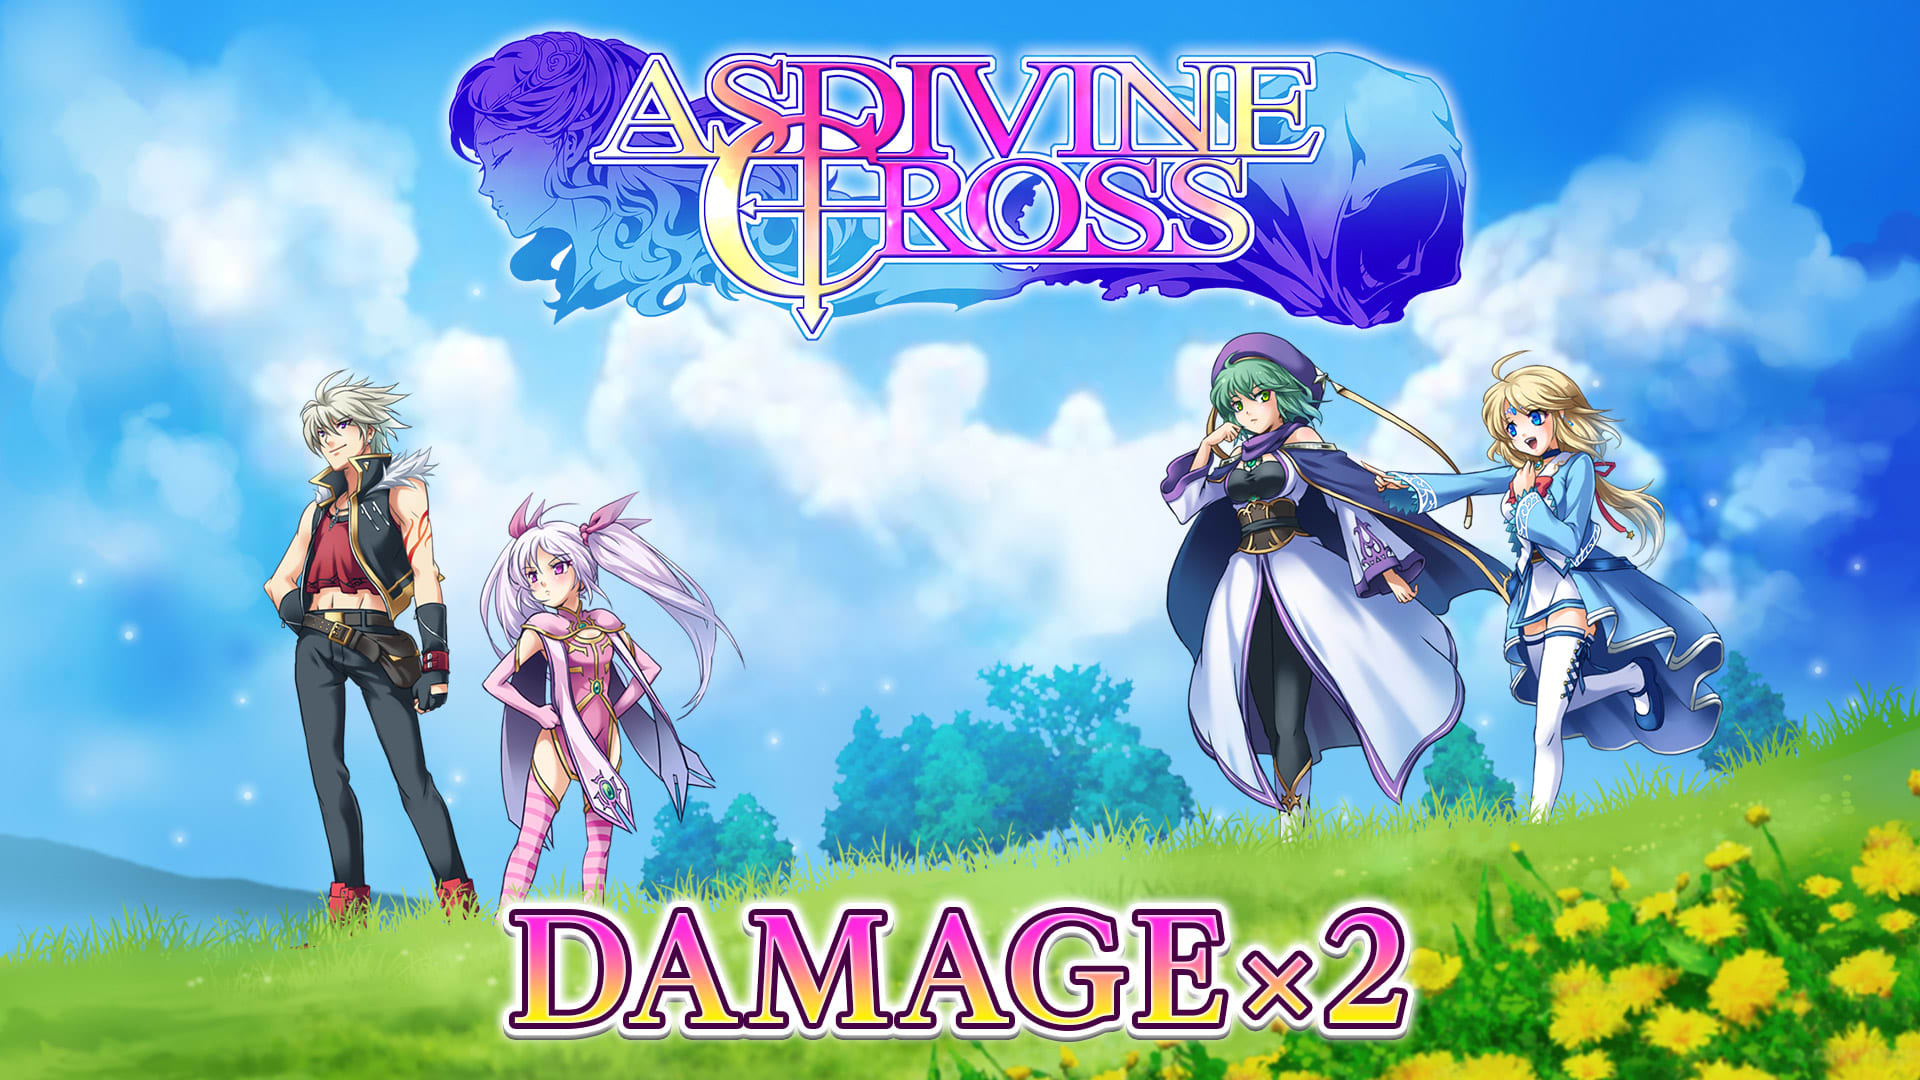 Damage x2 - Asdivine Cross